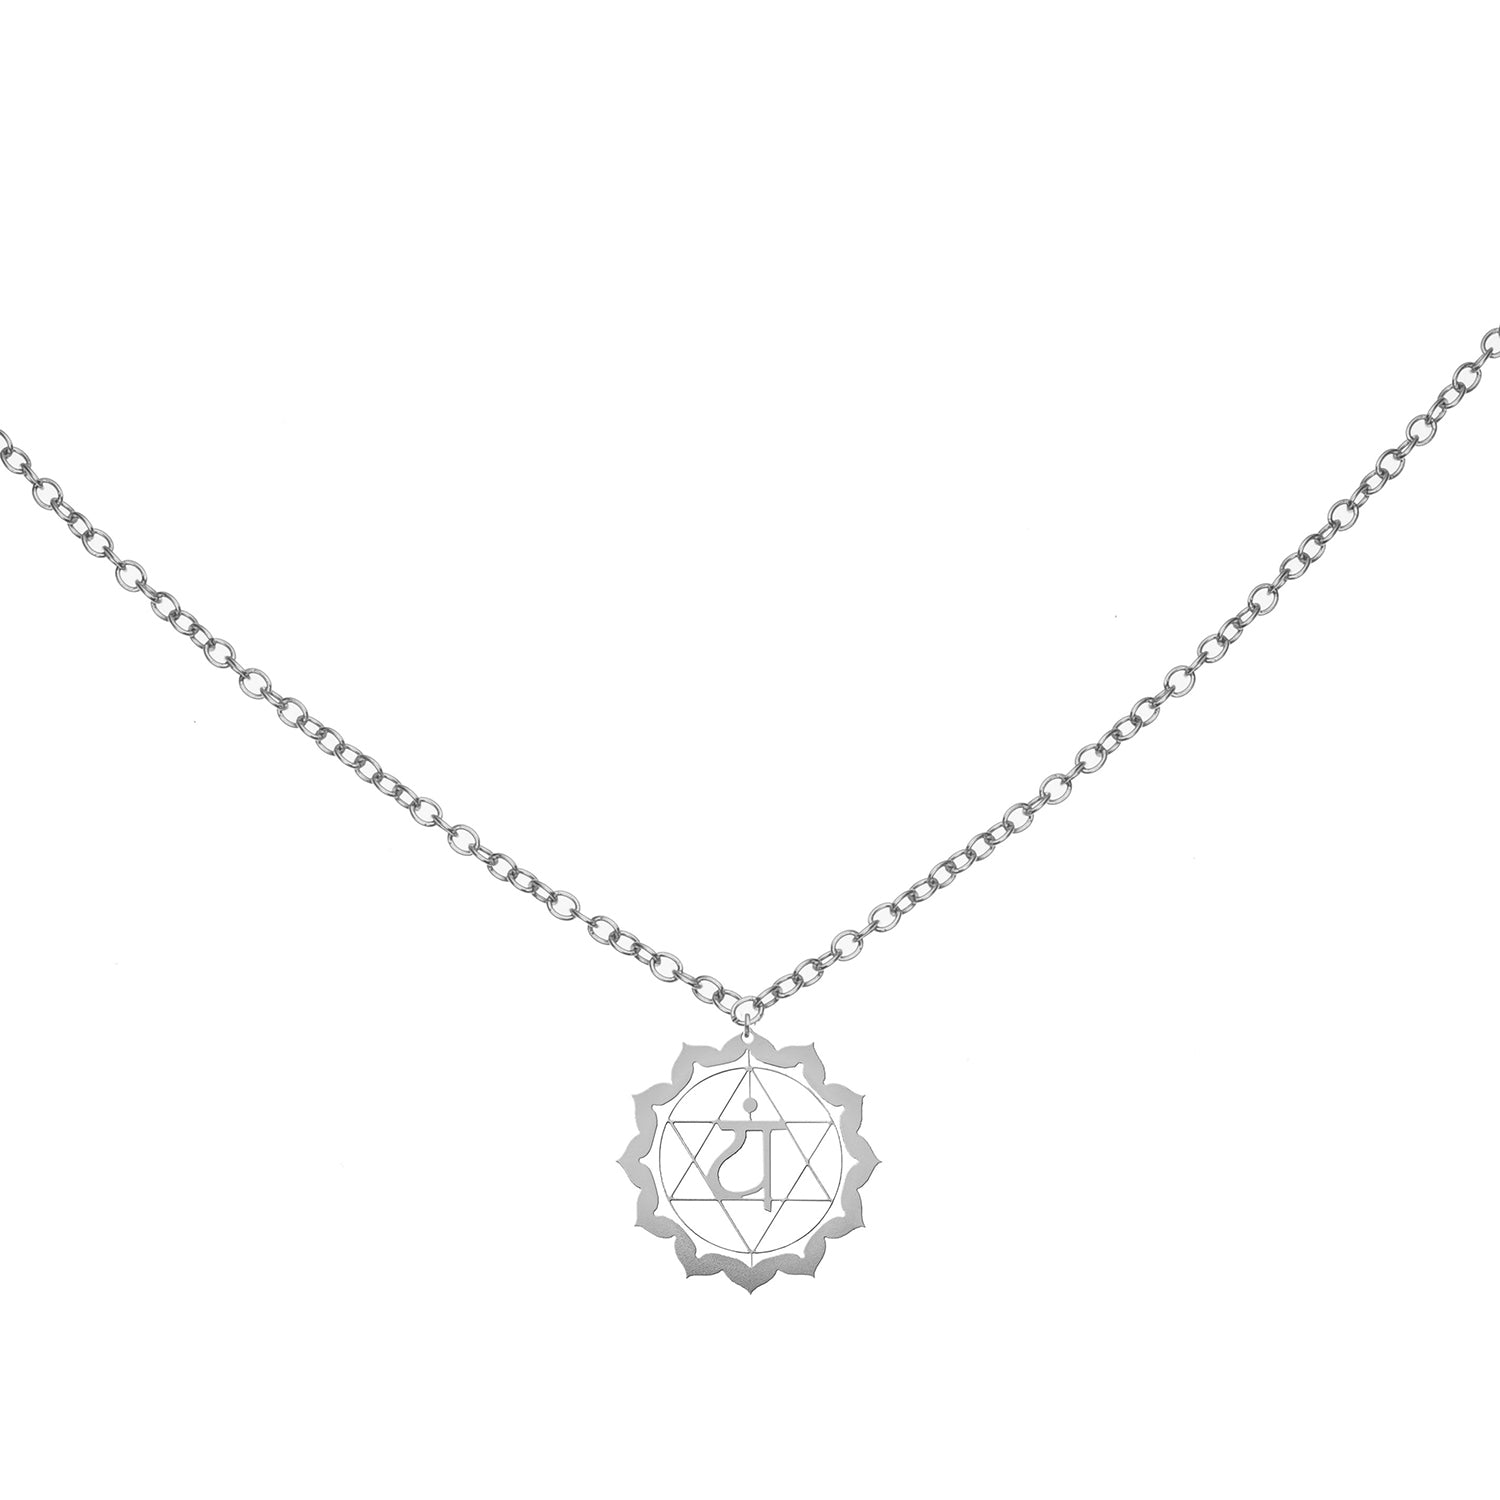 Silver heart chakra necklace